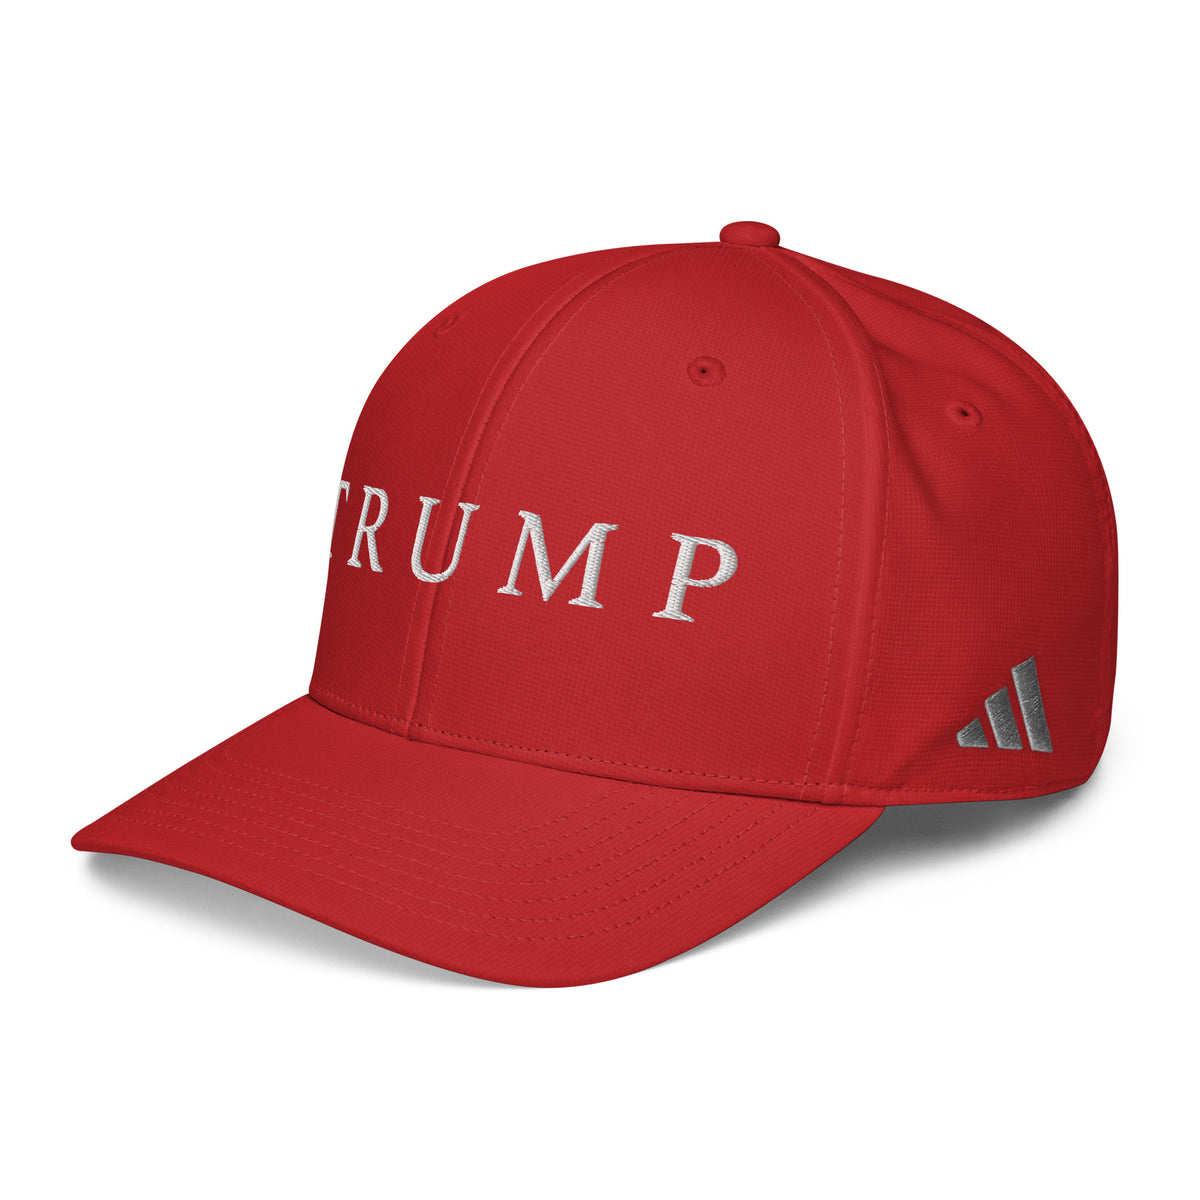 "Trump" Adidas Performance Cap